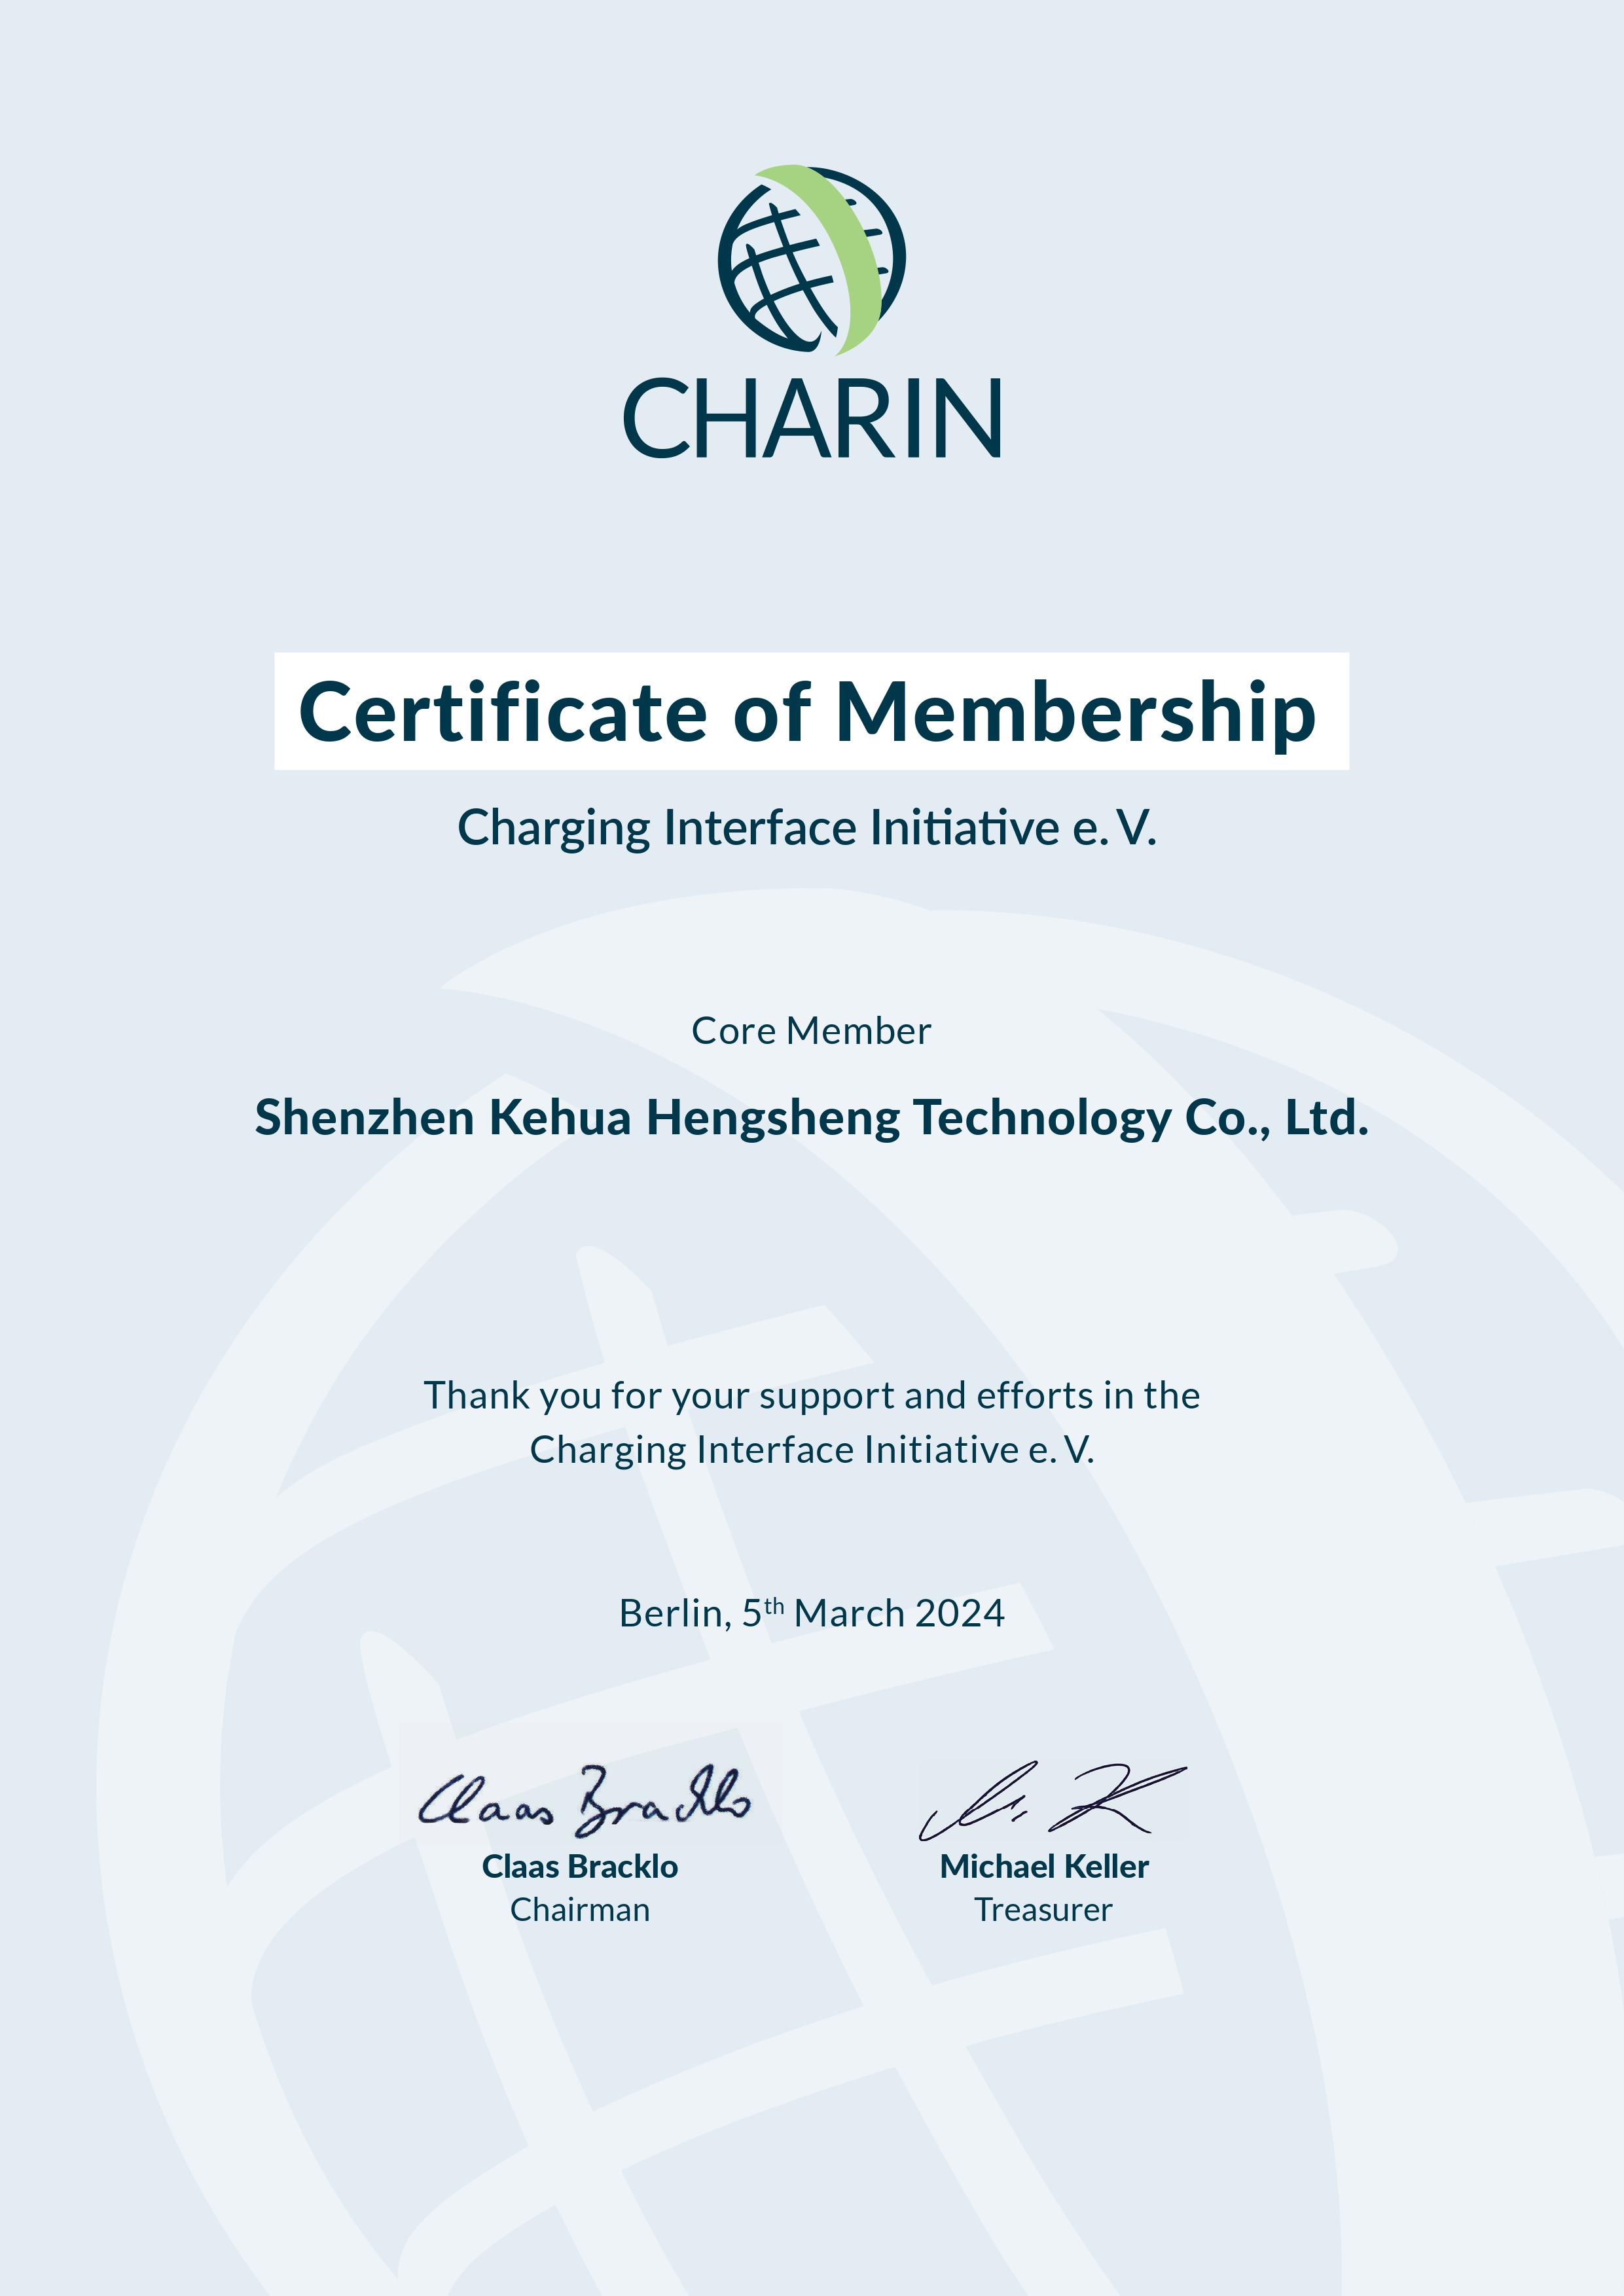 Shenzhen Kehua becomes a core member of CharIN